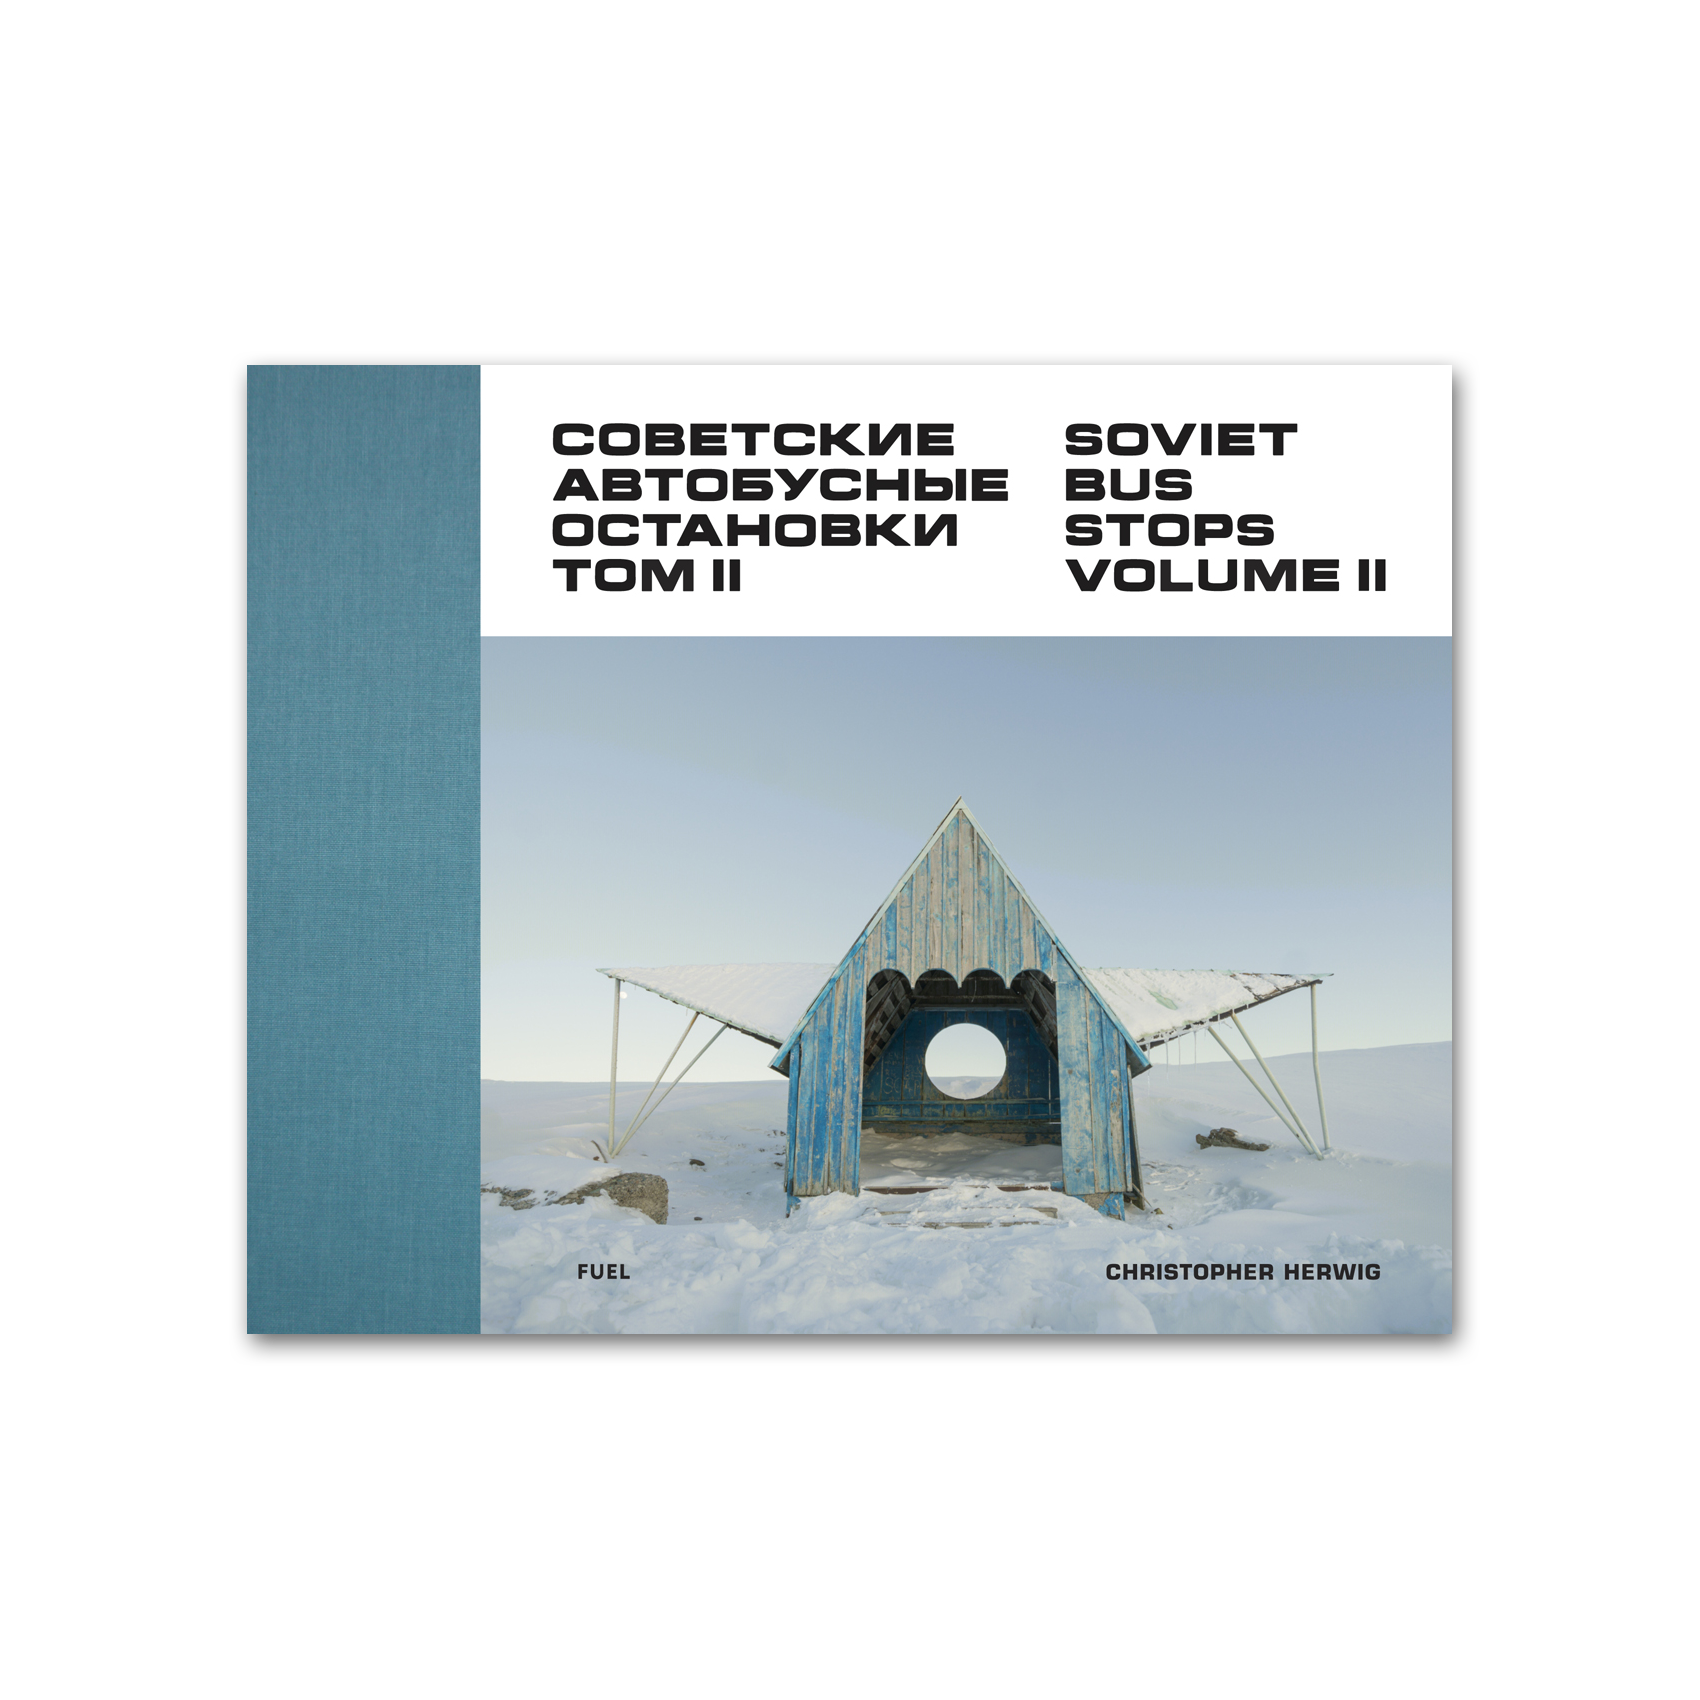 Soviet Bus Stops Volume II